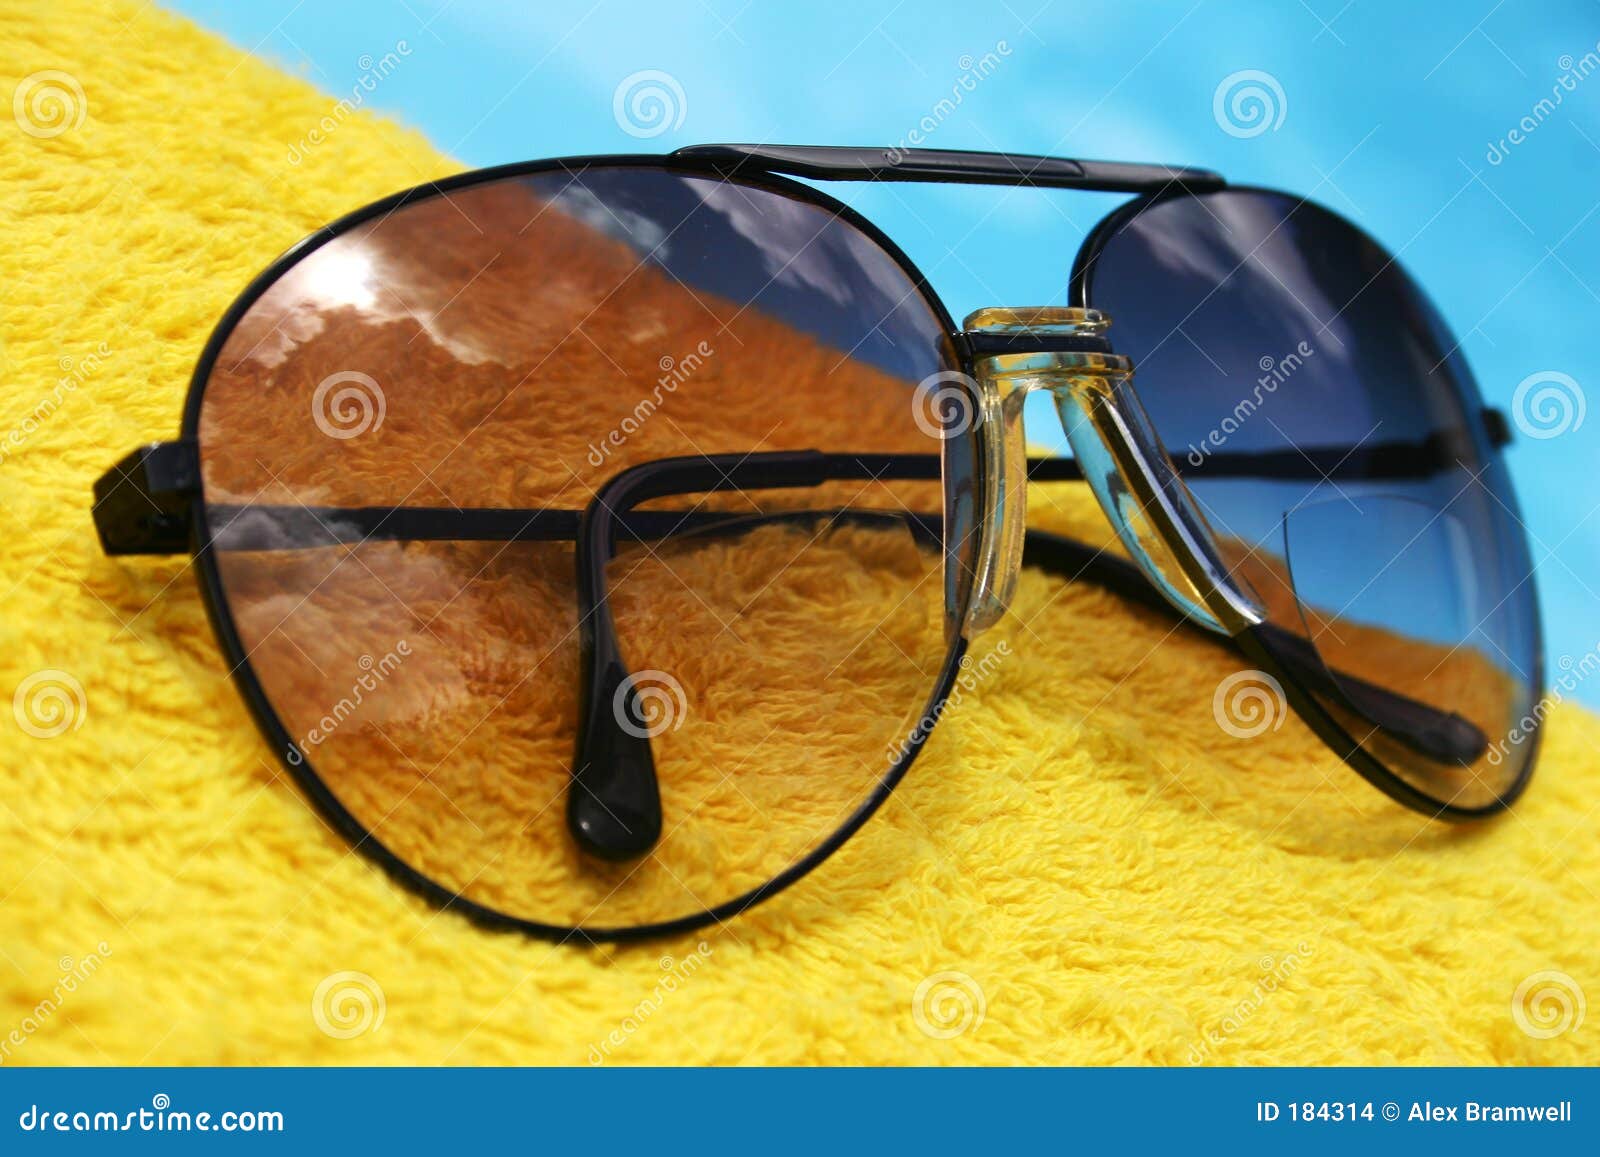 aviator sunglasses